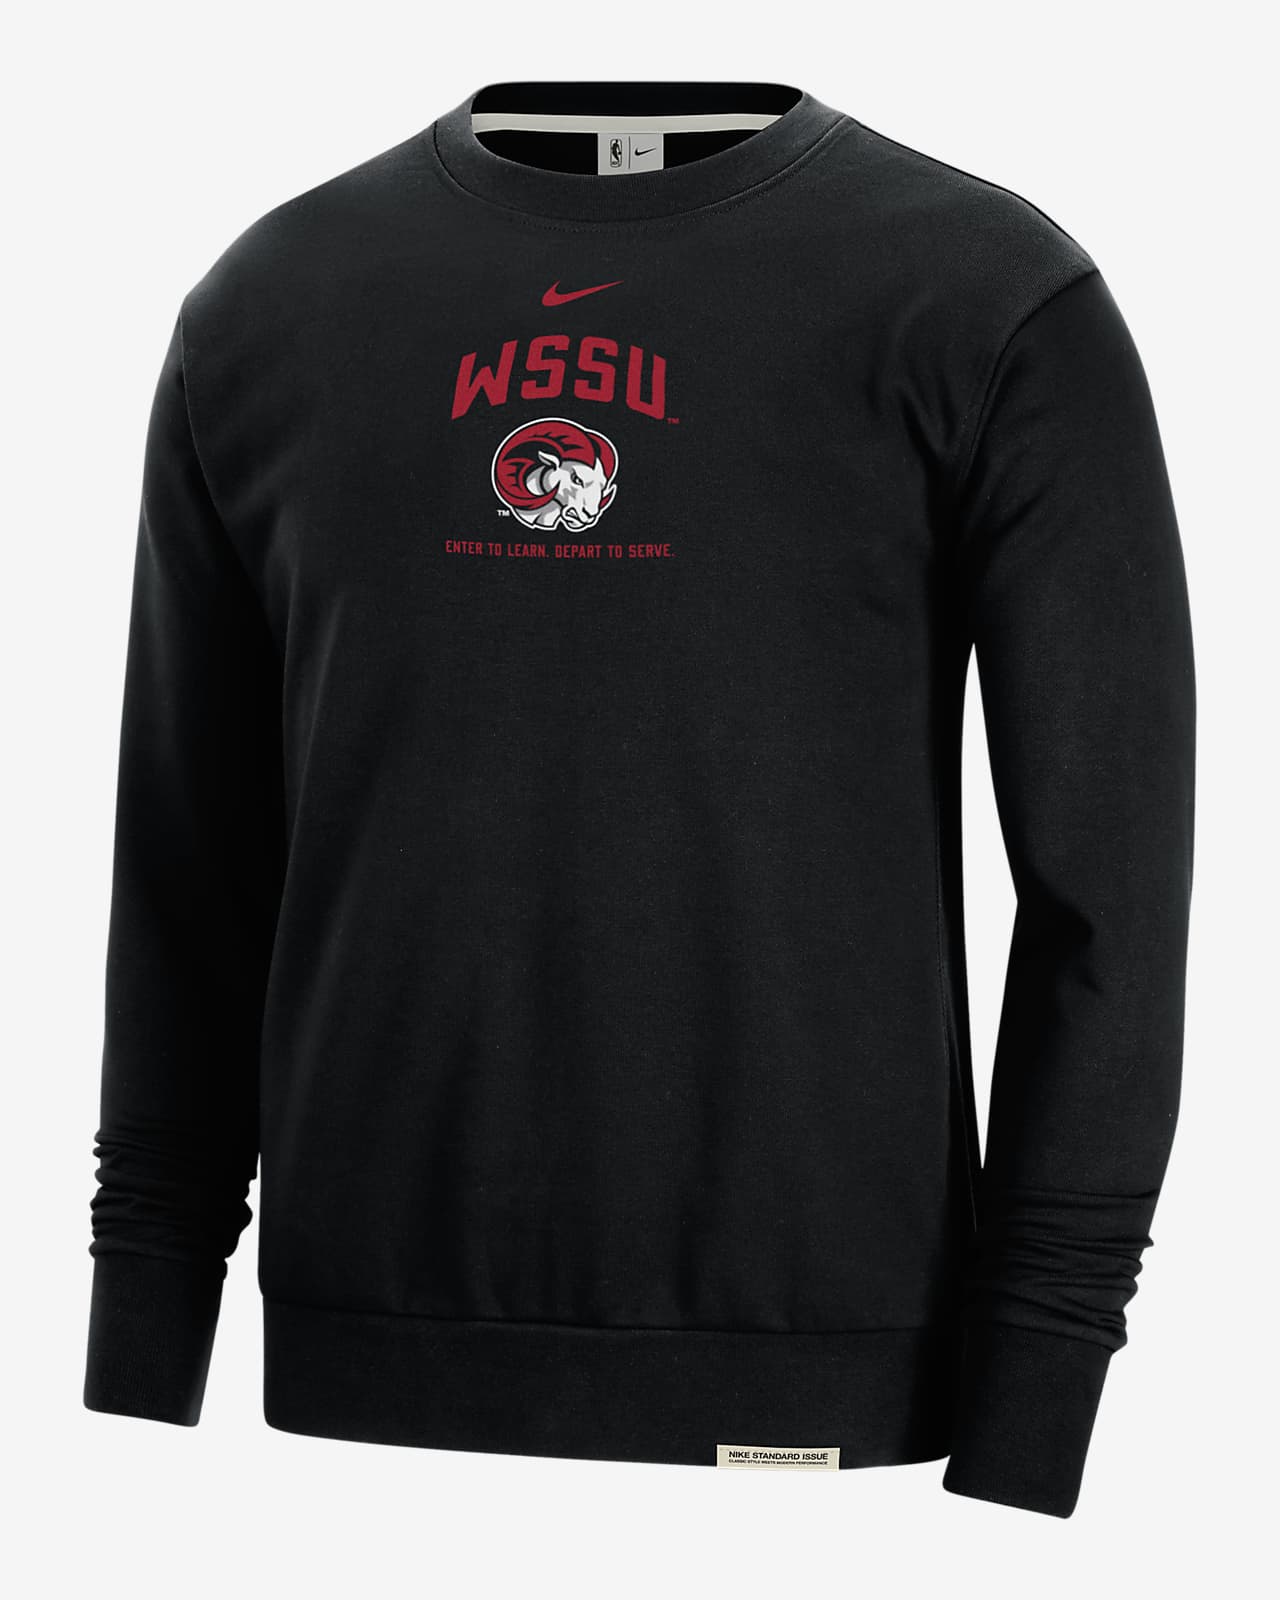 Winston-Salem Standard Issue Men's Nike College Fleece Crew-Neck Sweatshirt